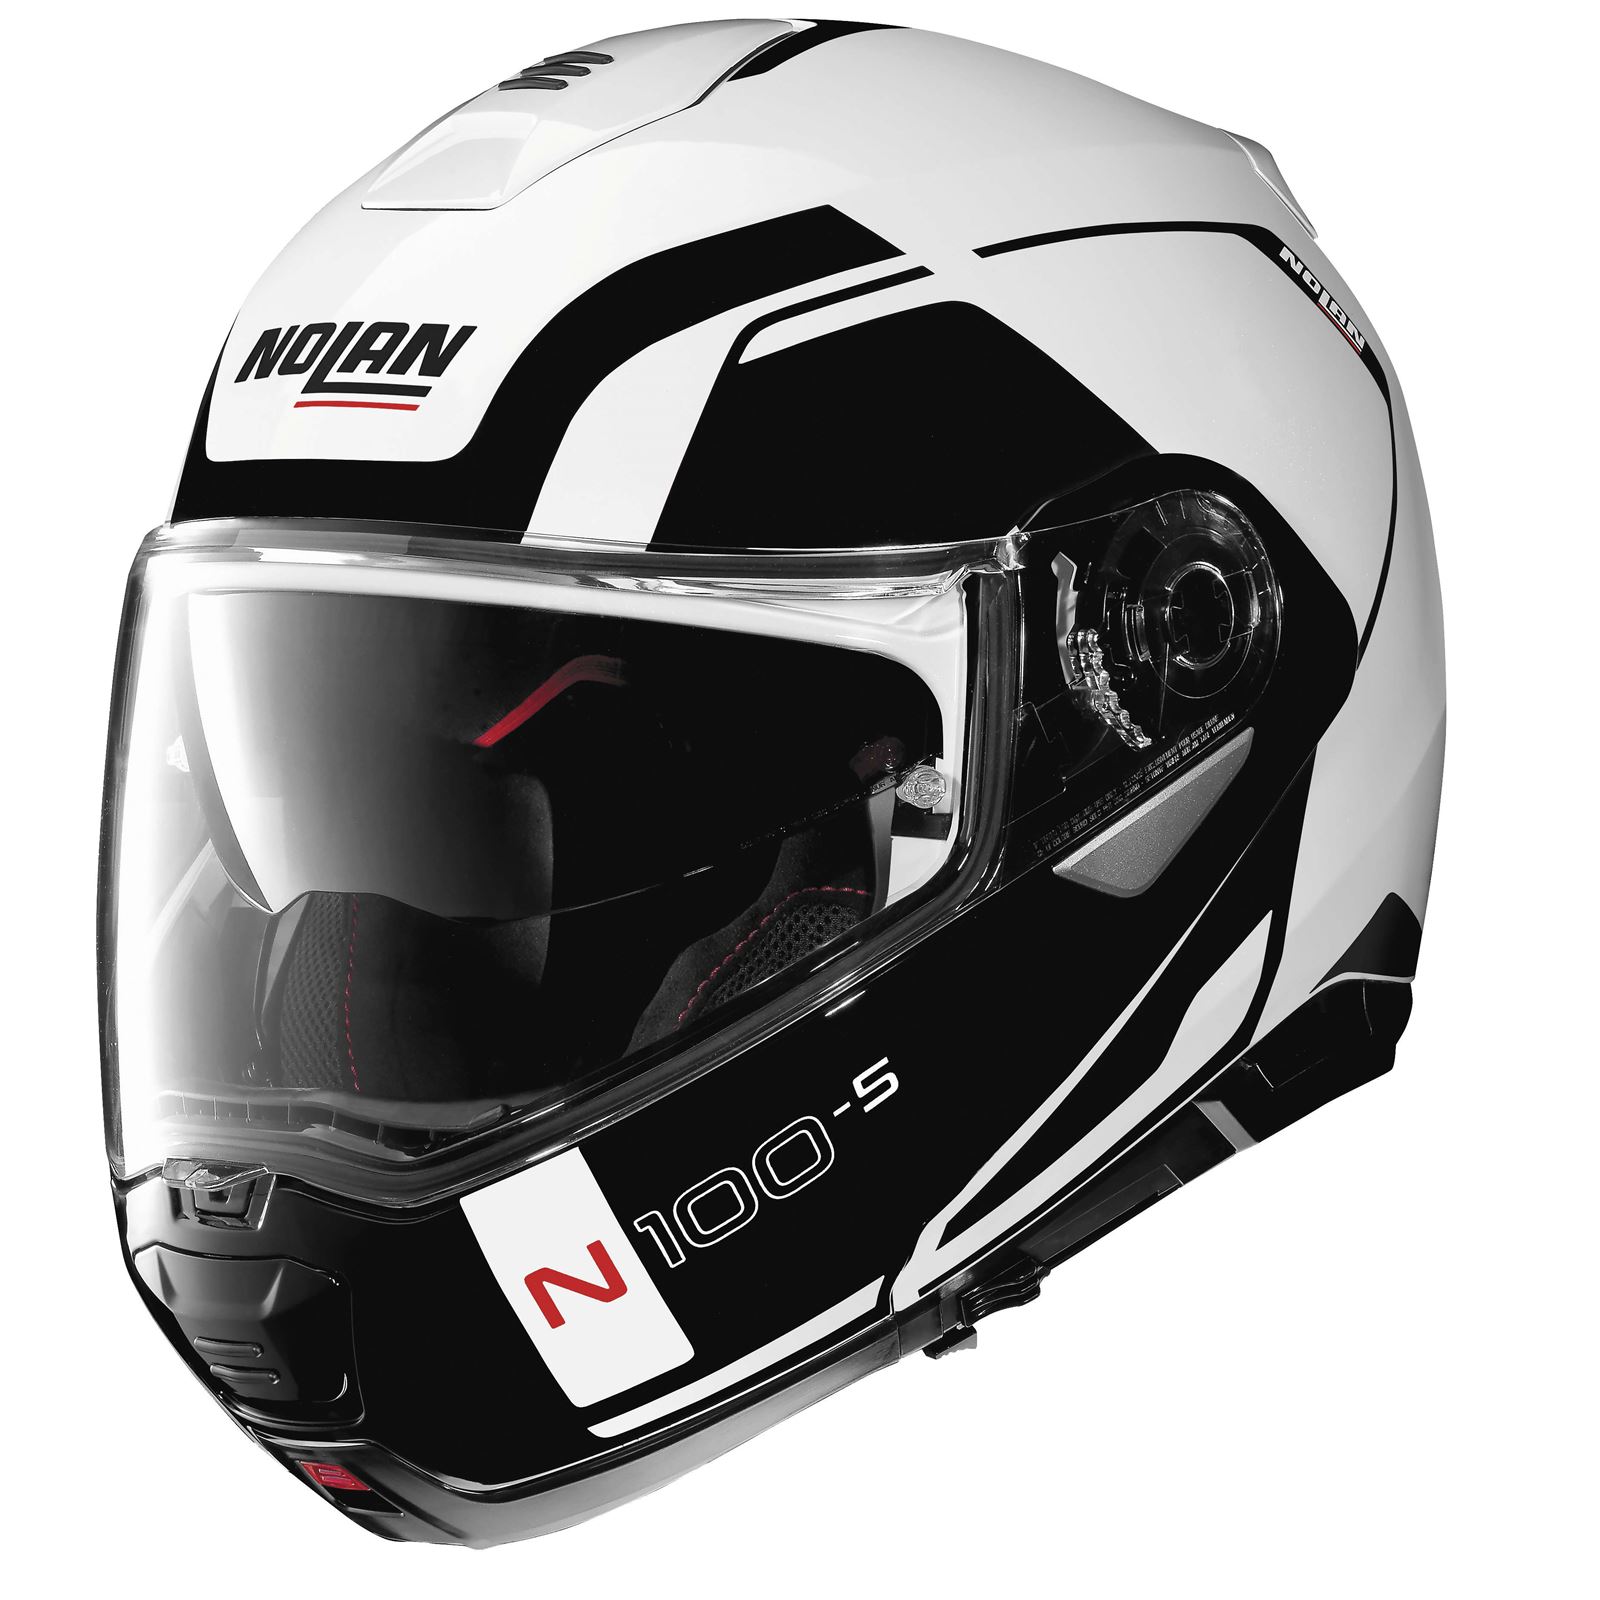 Nolan Helmets N100-5 Consistency Modular Helmet Metallic White - Large CLOSEOUT